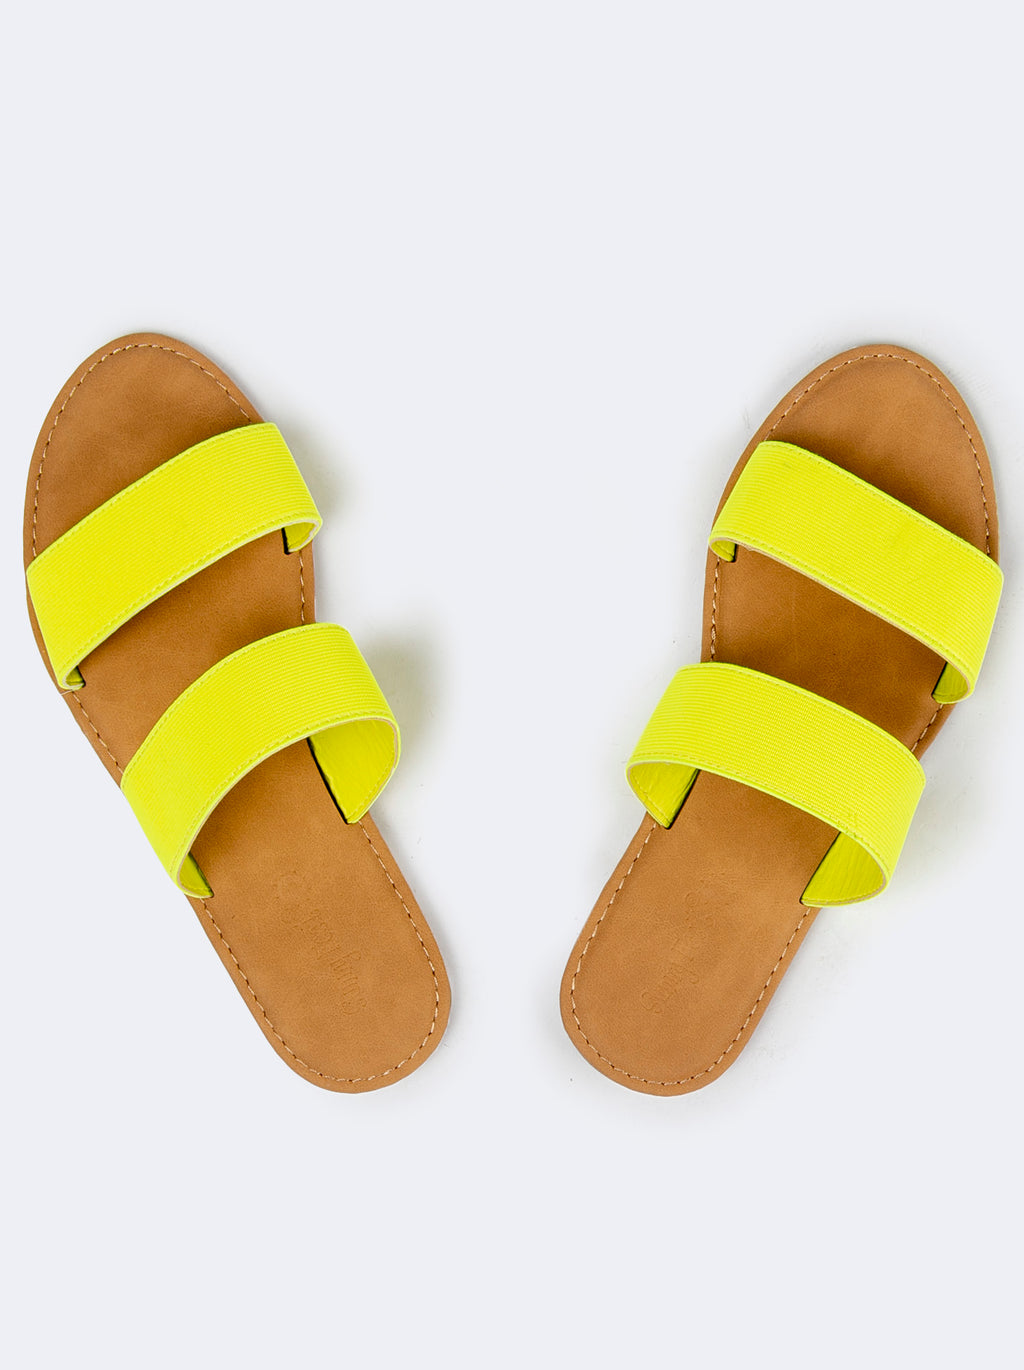 sunny feet sandals wholesale